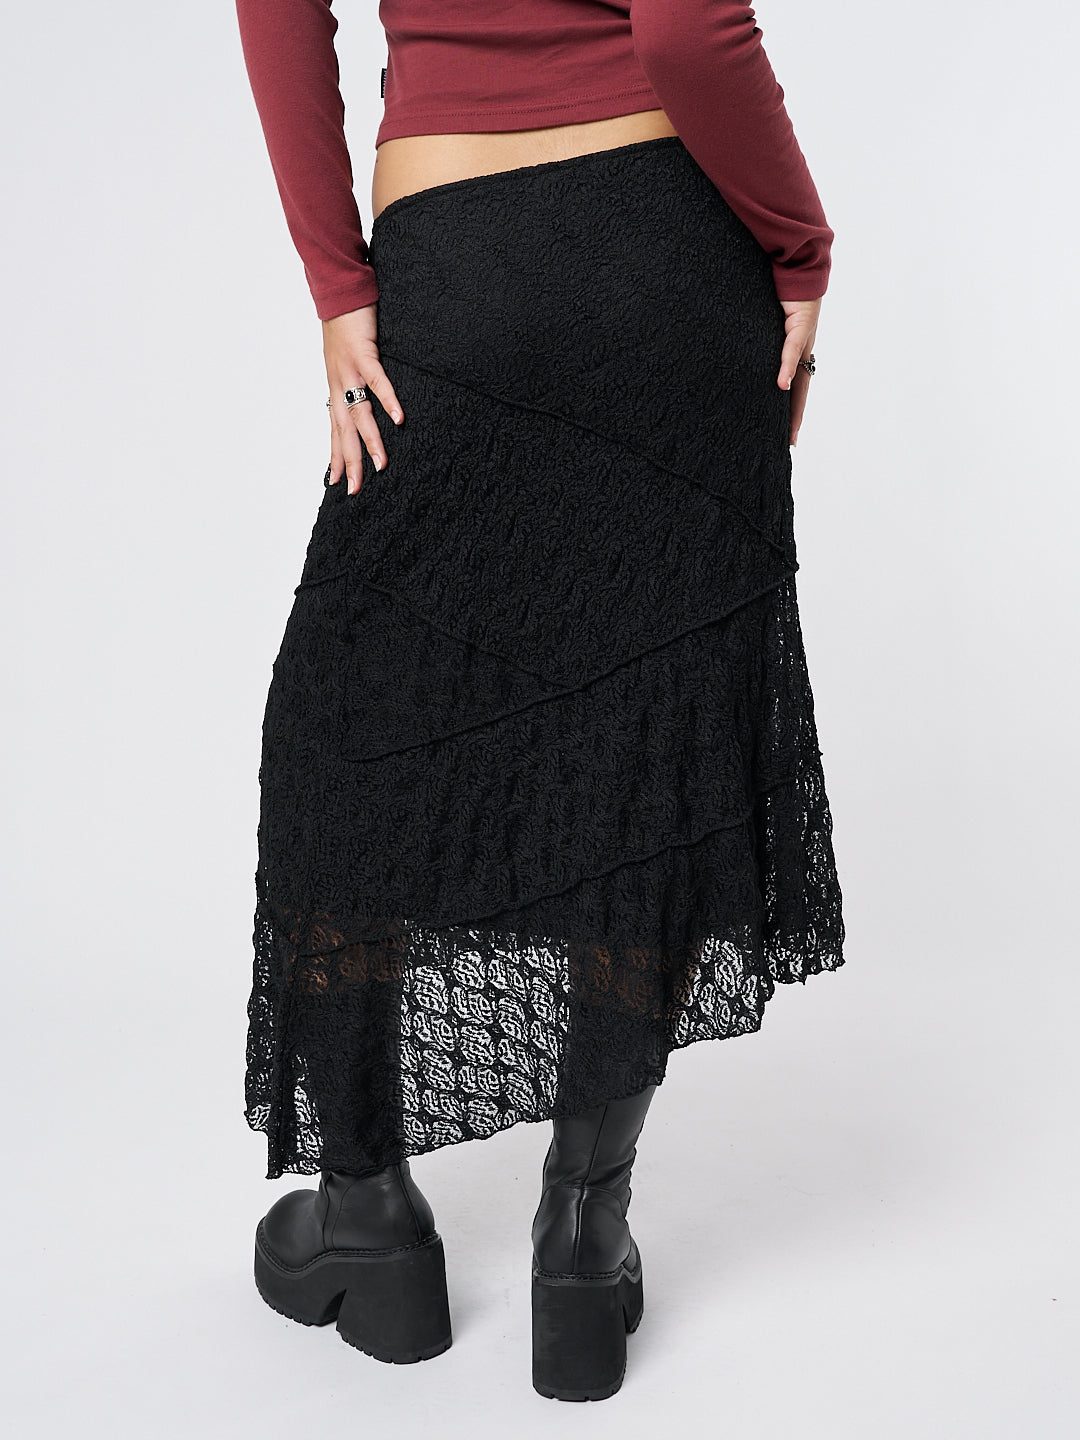 Nolia Black Lace Asymmetric Midi Skirt